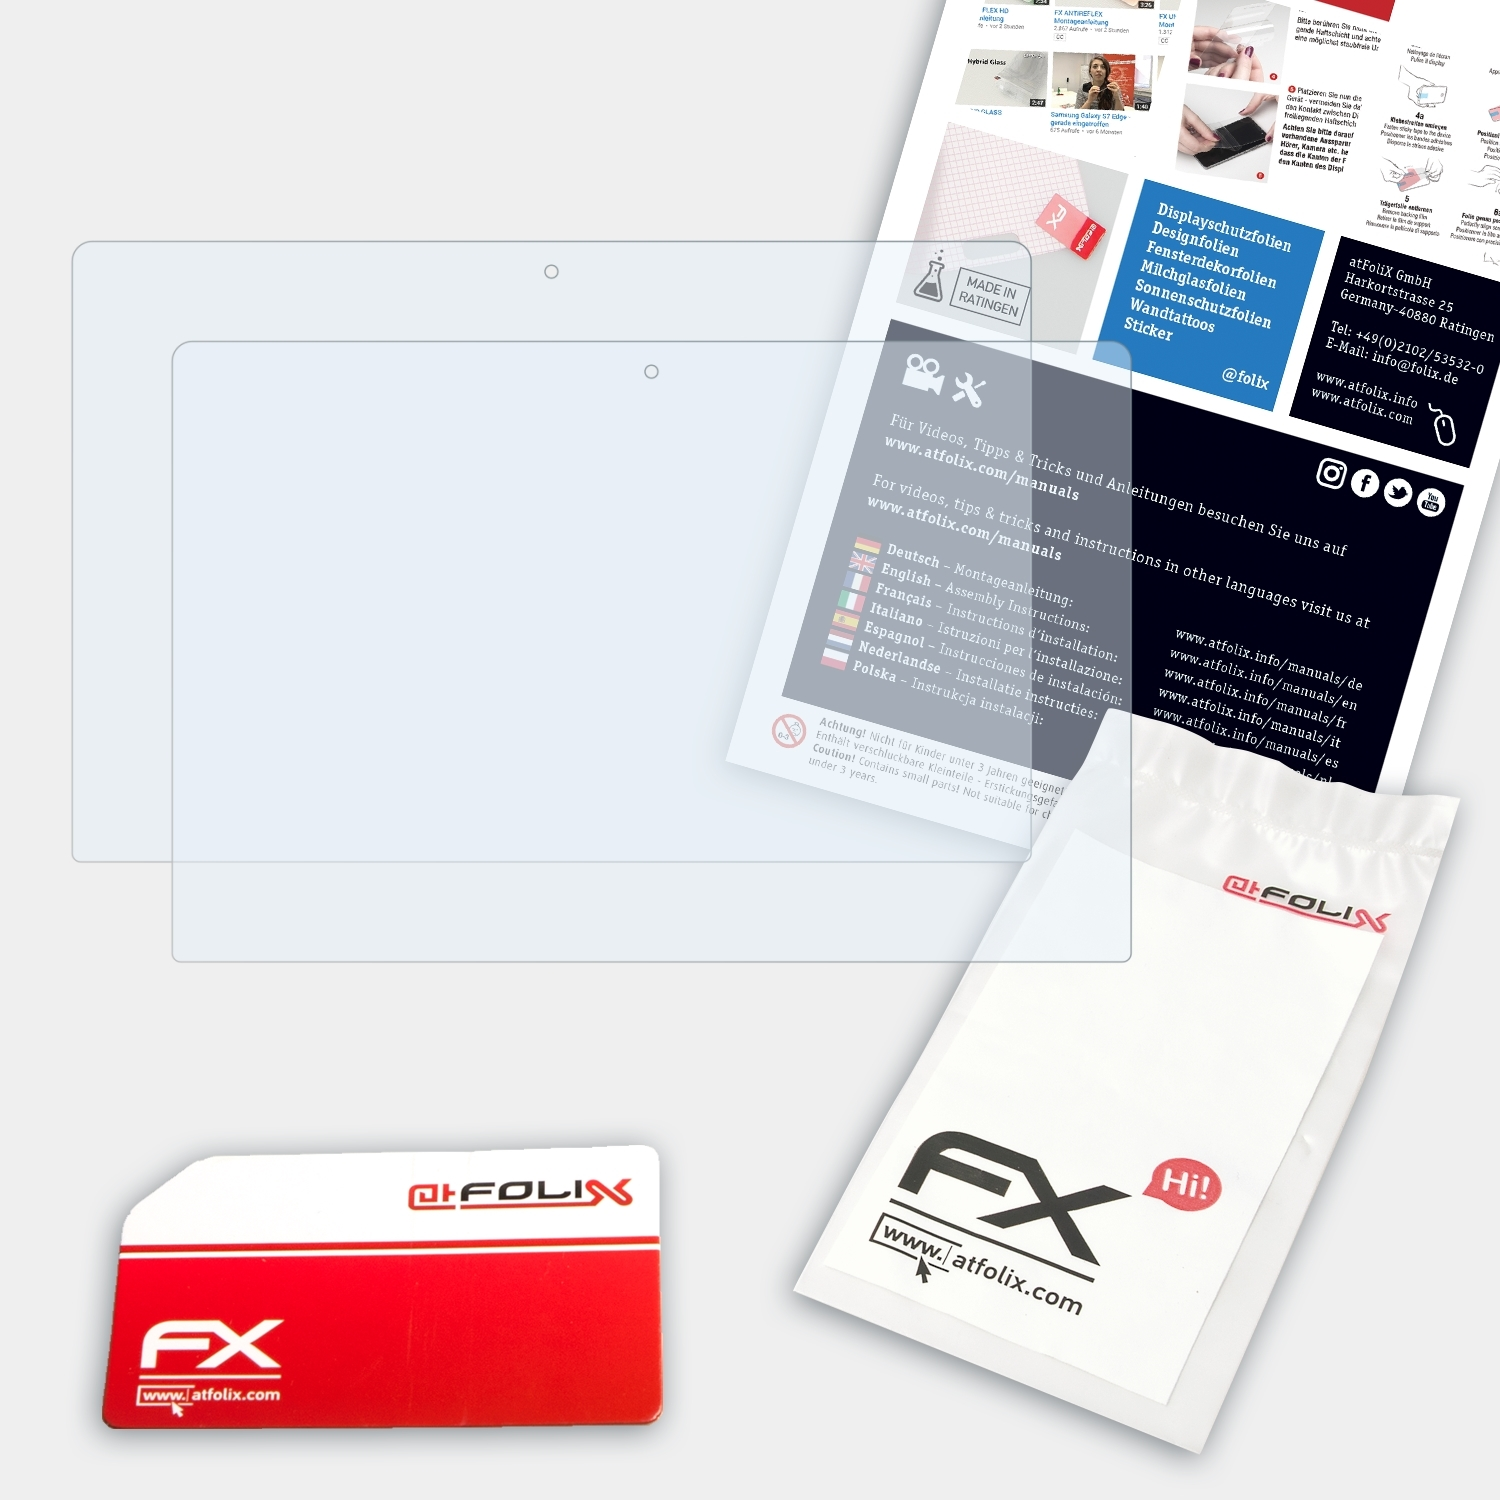 ATFOLIX 2x S400CA) FX-Clear VivoBook Asus Displayschutz(für